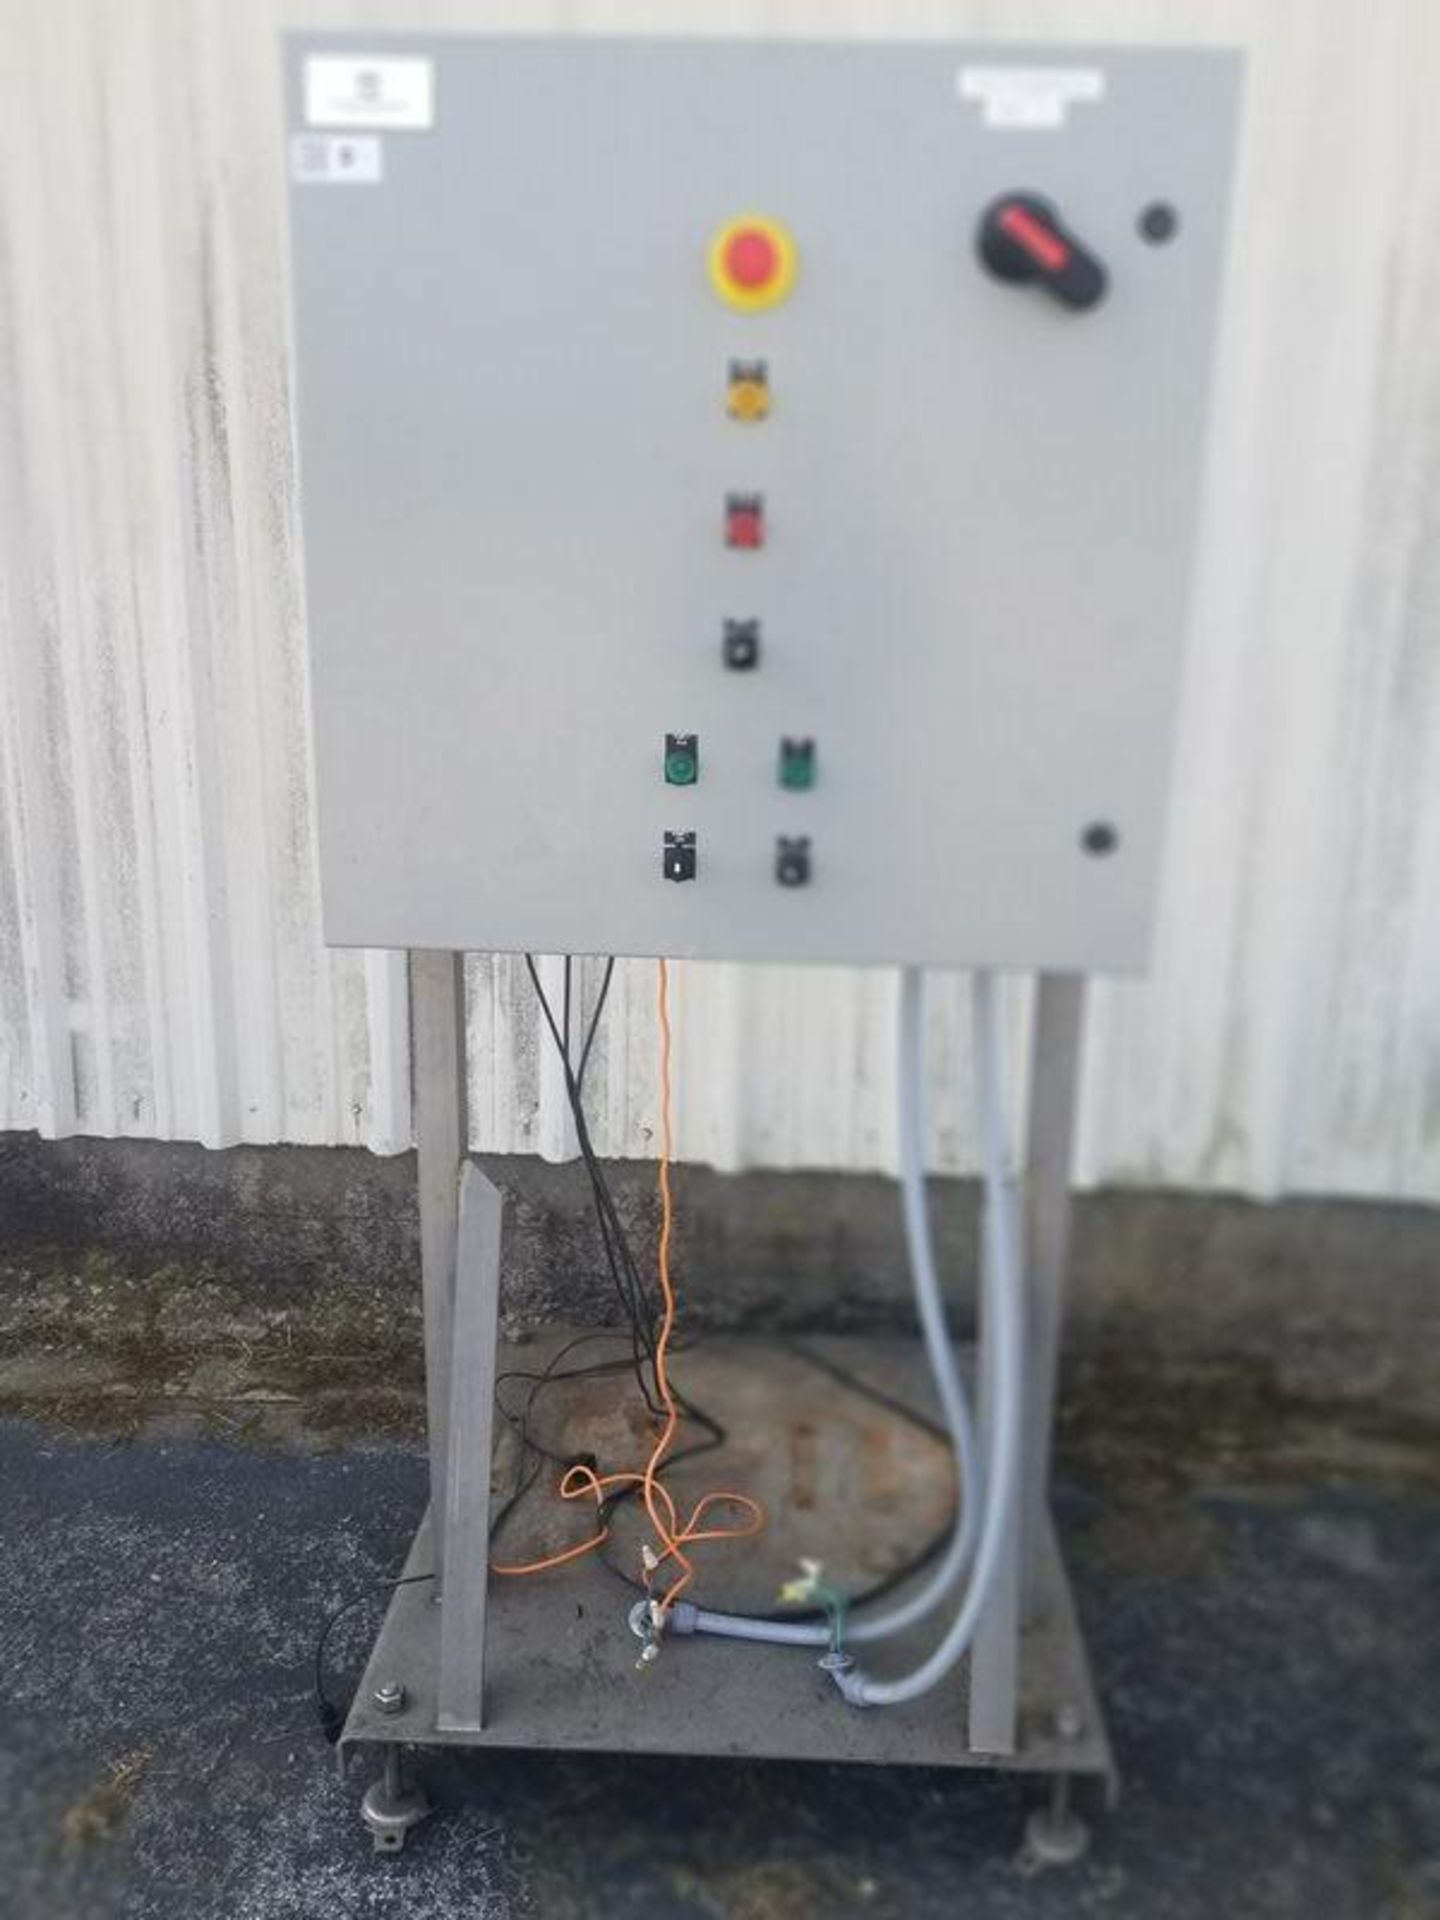 Pump Control Panel.